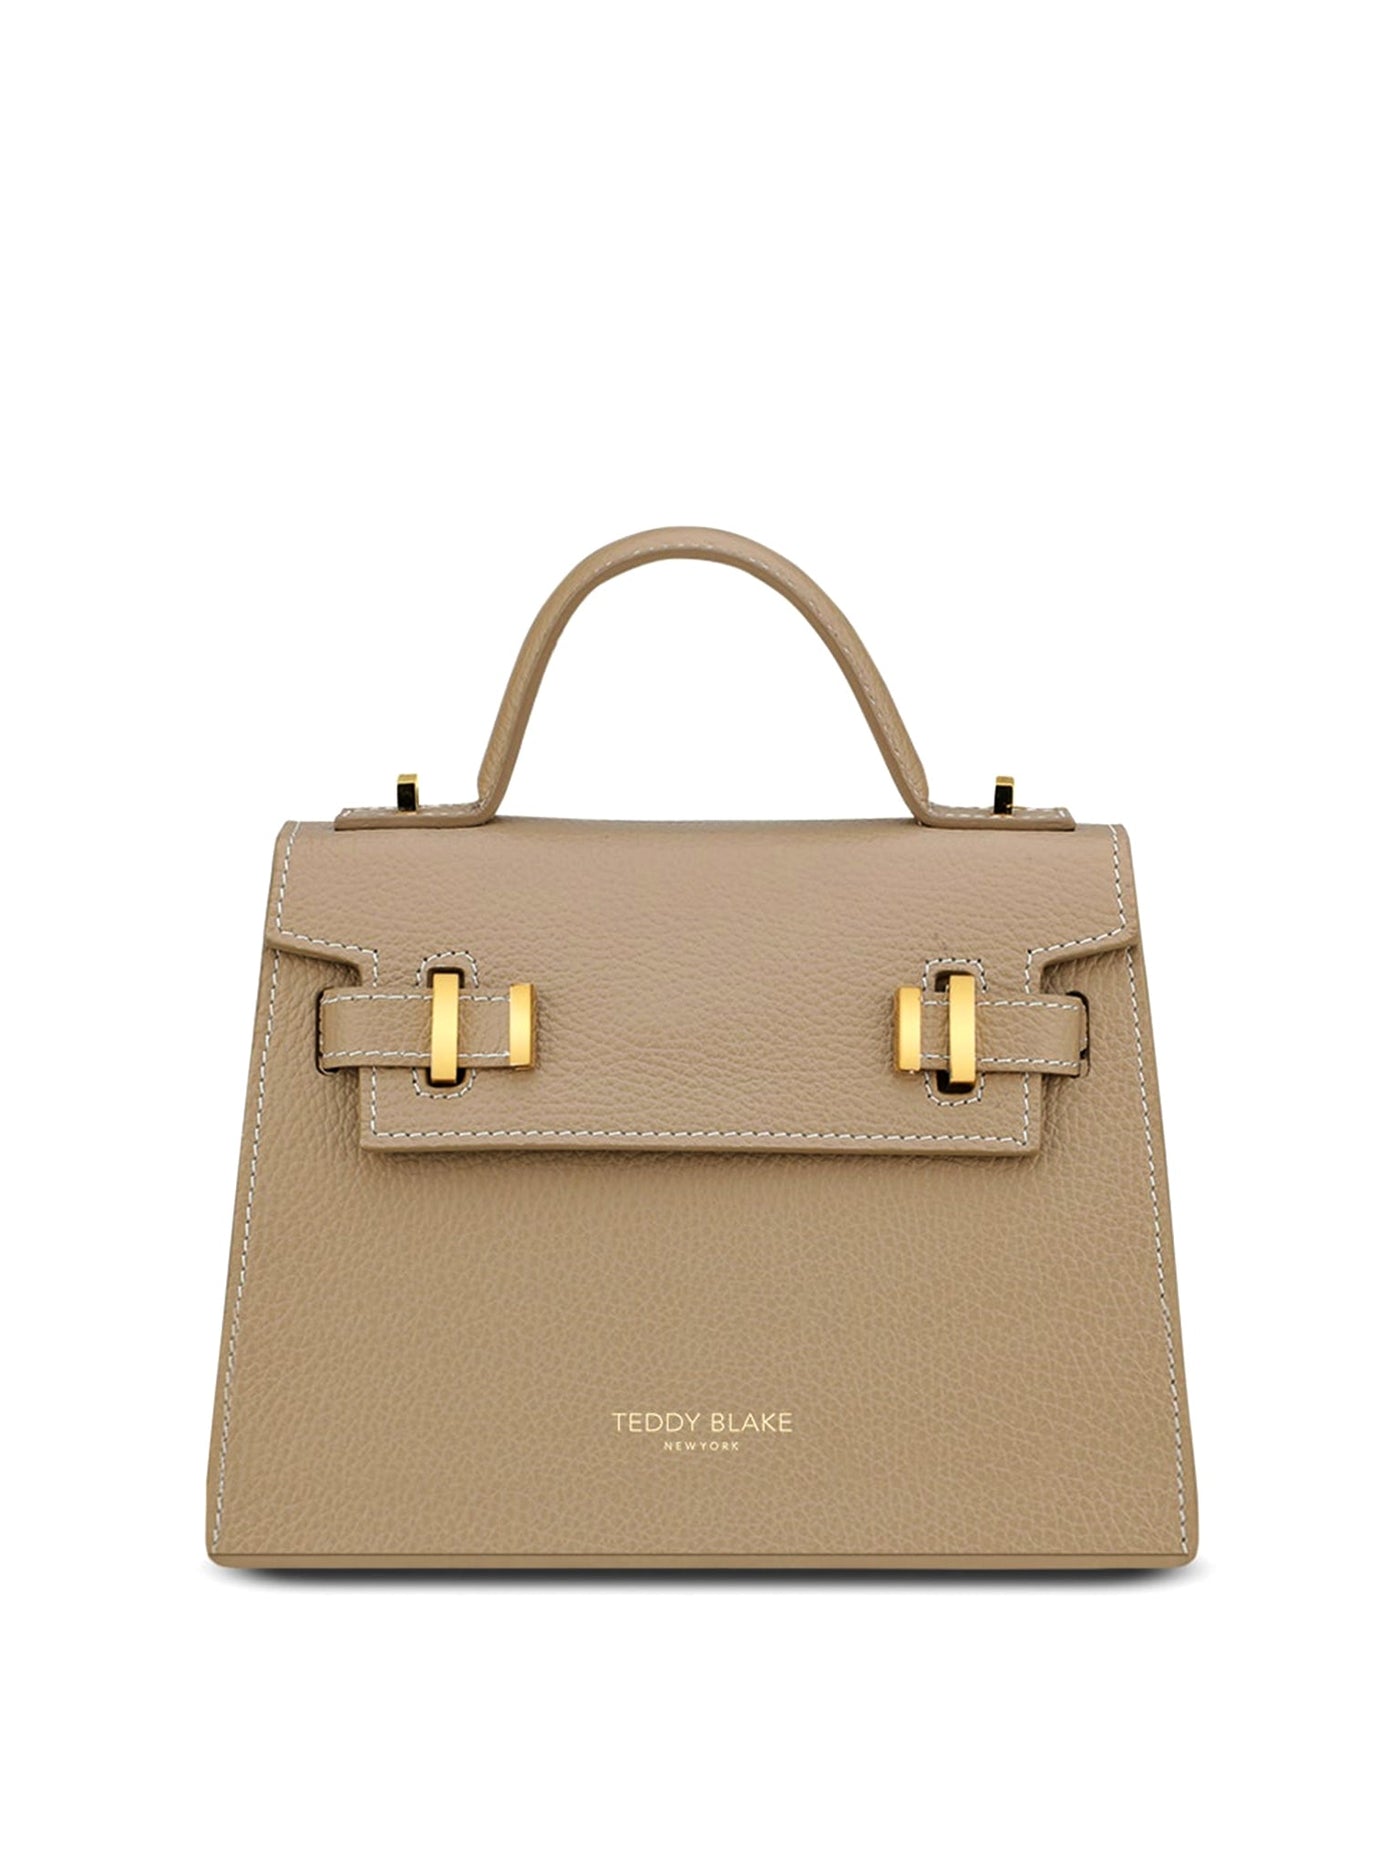 Shop Teddy Blake New York Women's Handbags